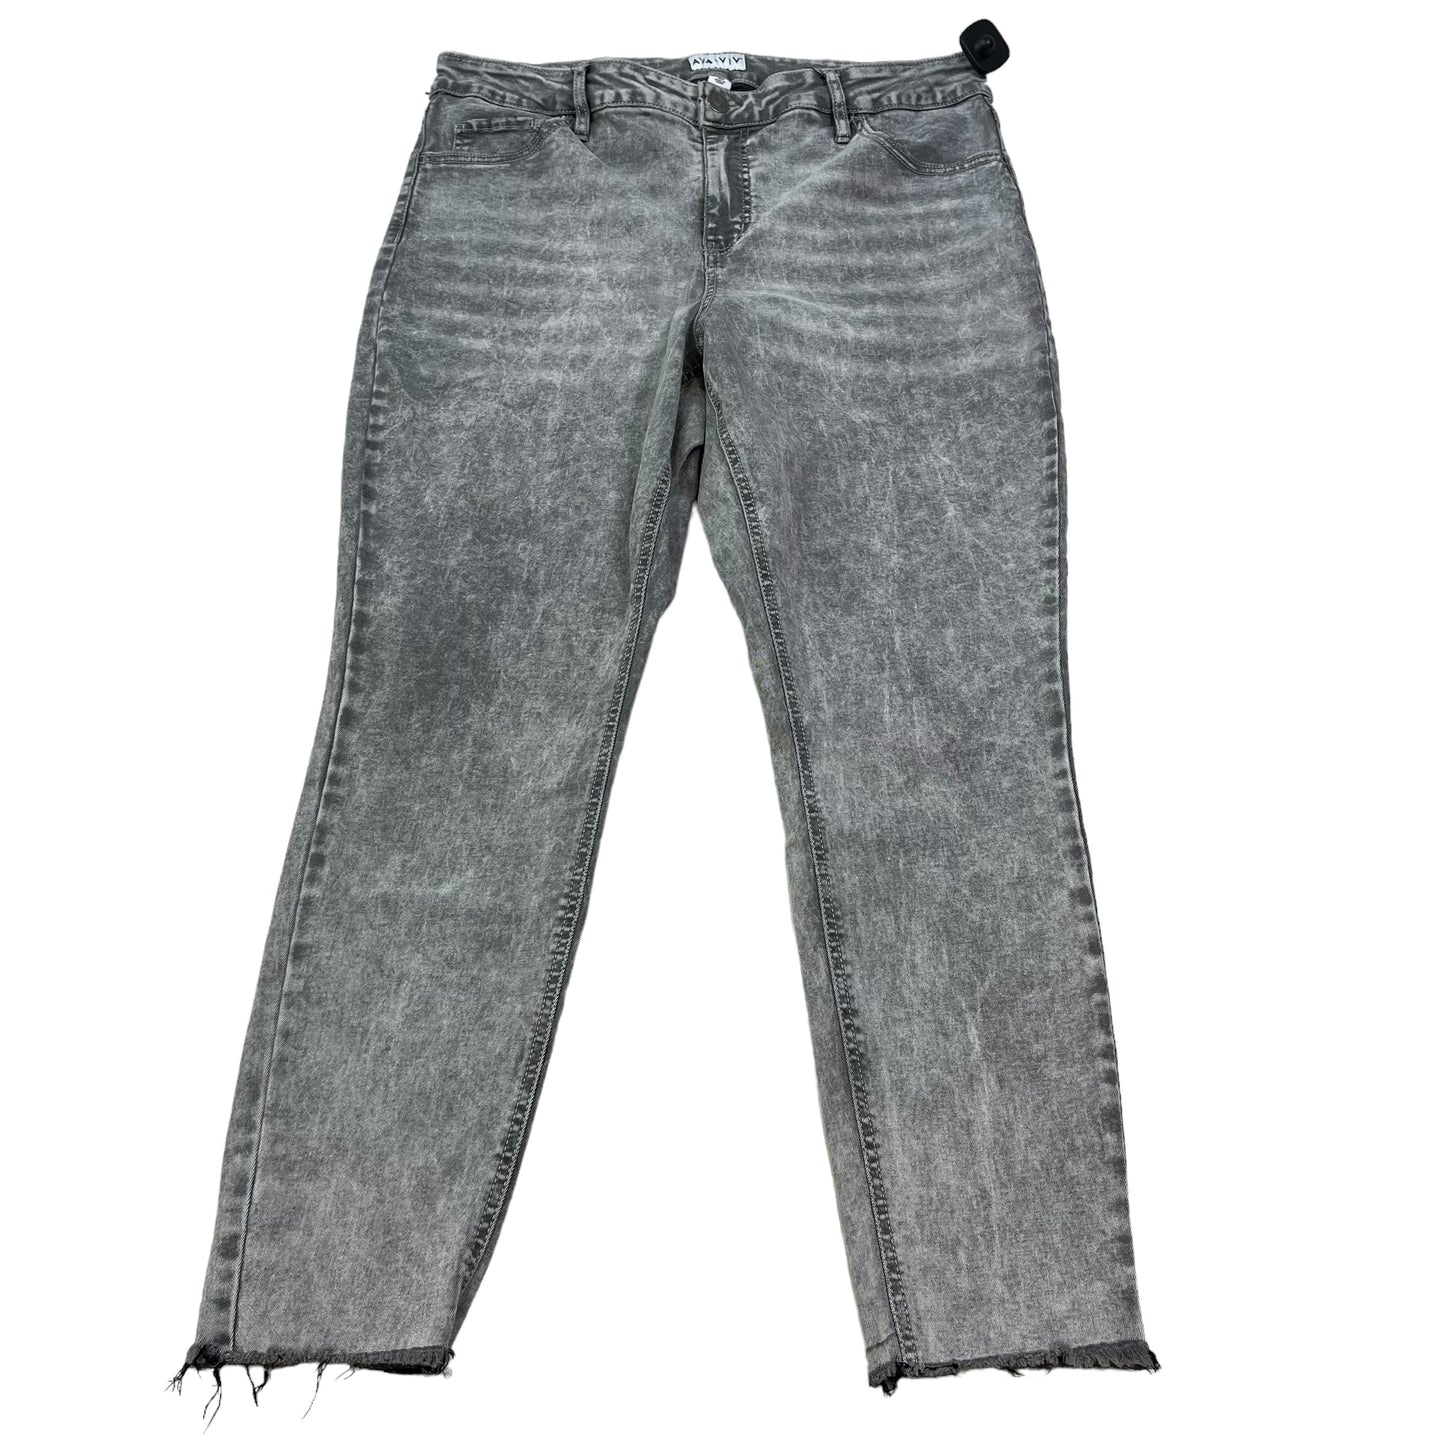 Grey Denim Jeans Skinny Ava & Viv, Size 18w